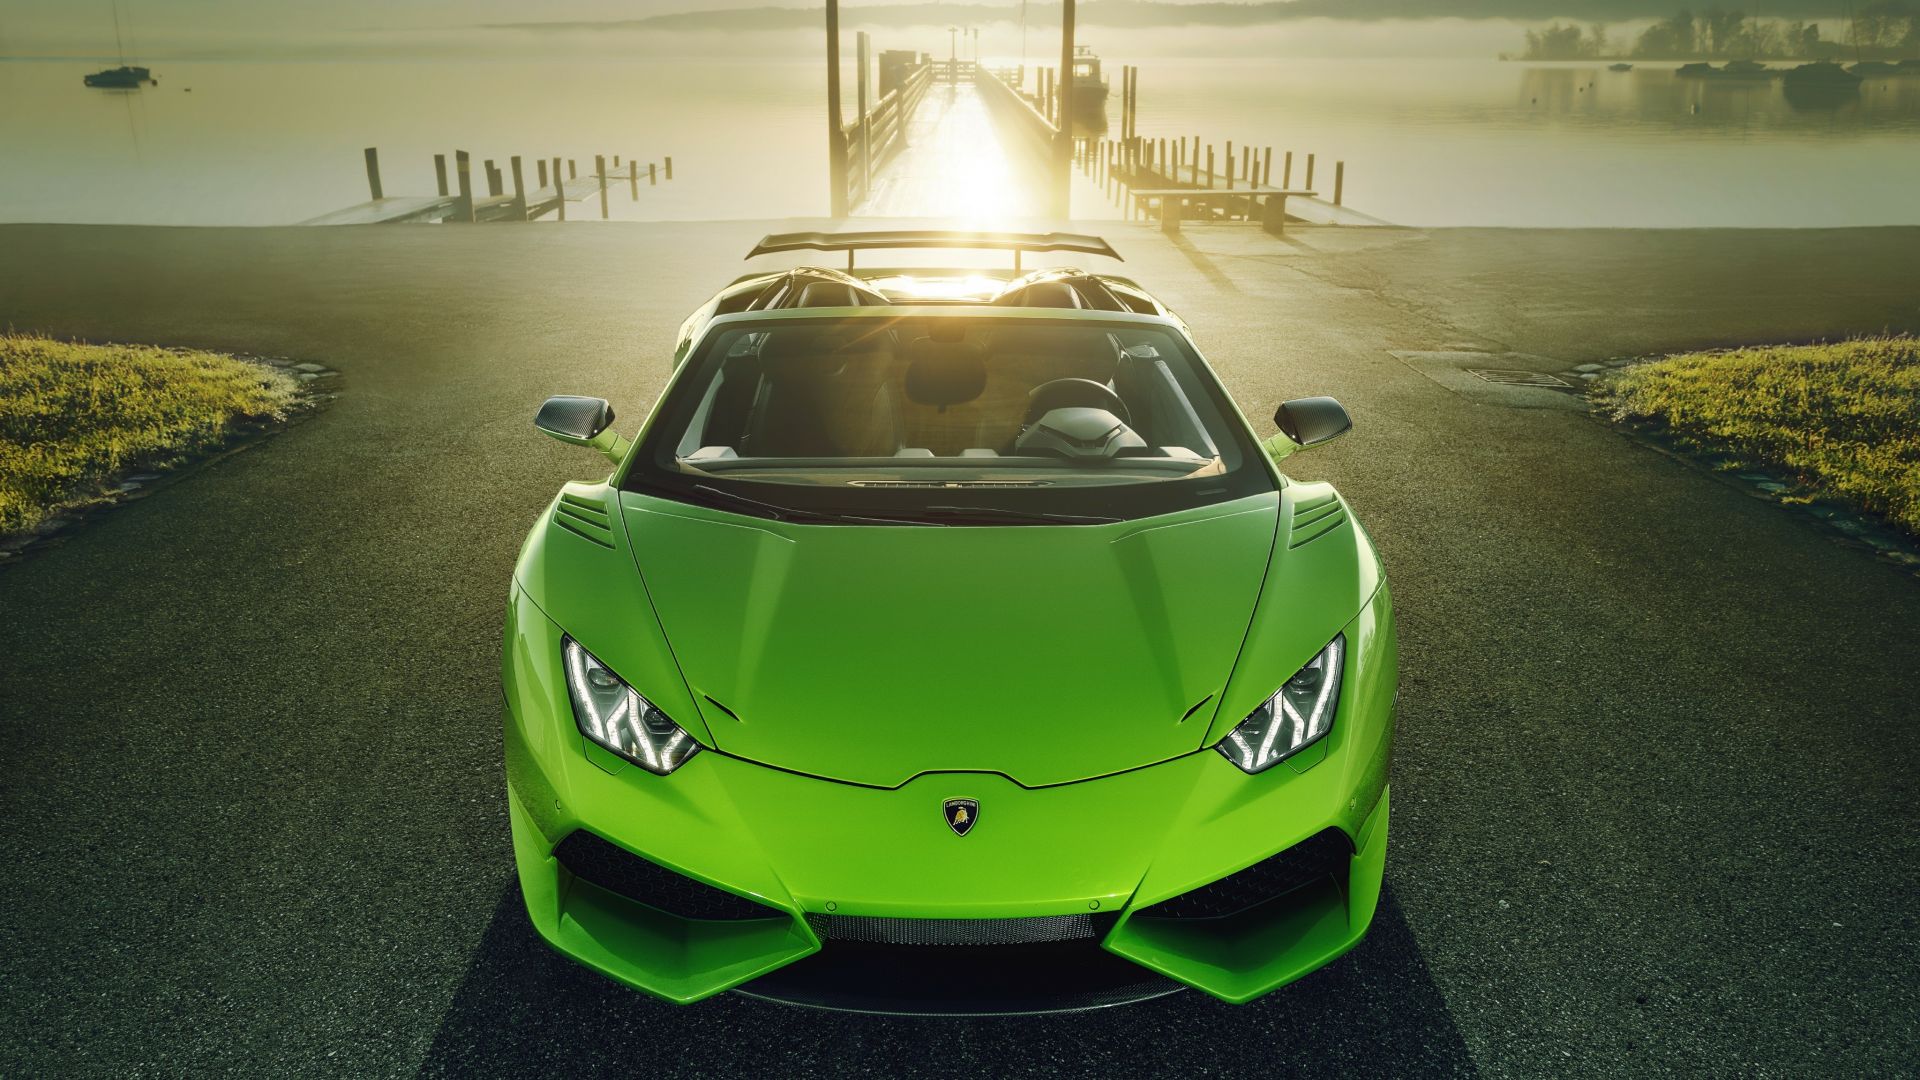 Desktop Wallpaper Lamborghini Huracan, Green, Sports Car, Hd Image,  Picture, Background, D536f6